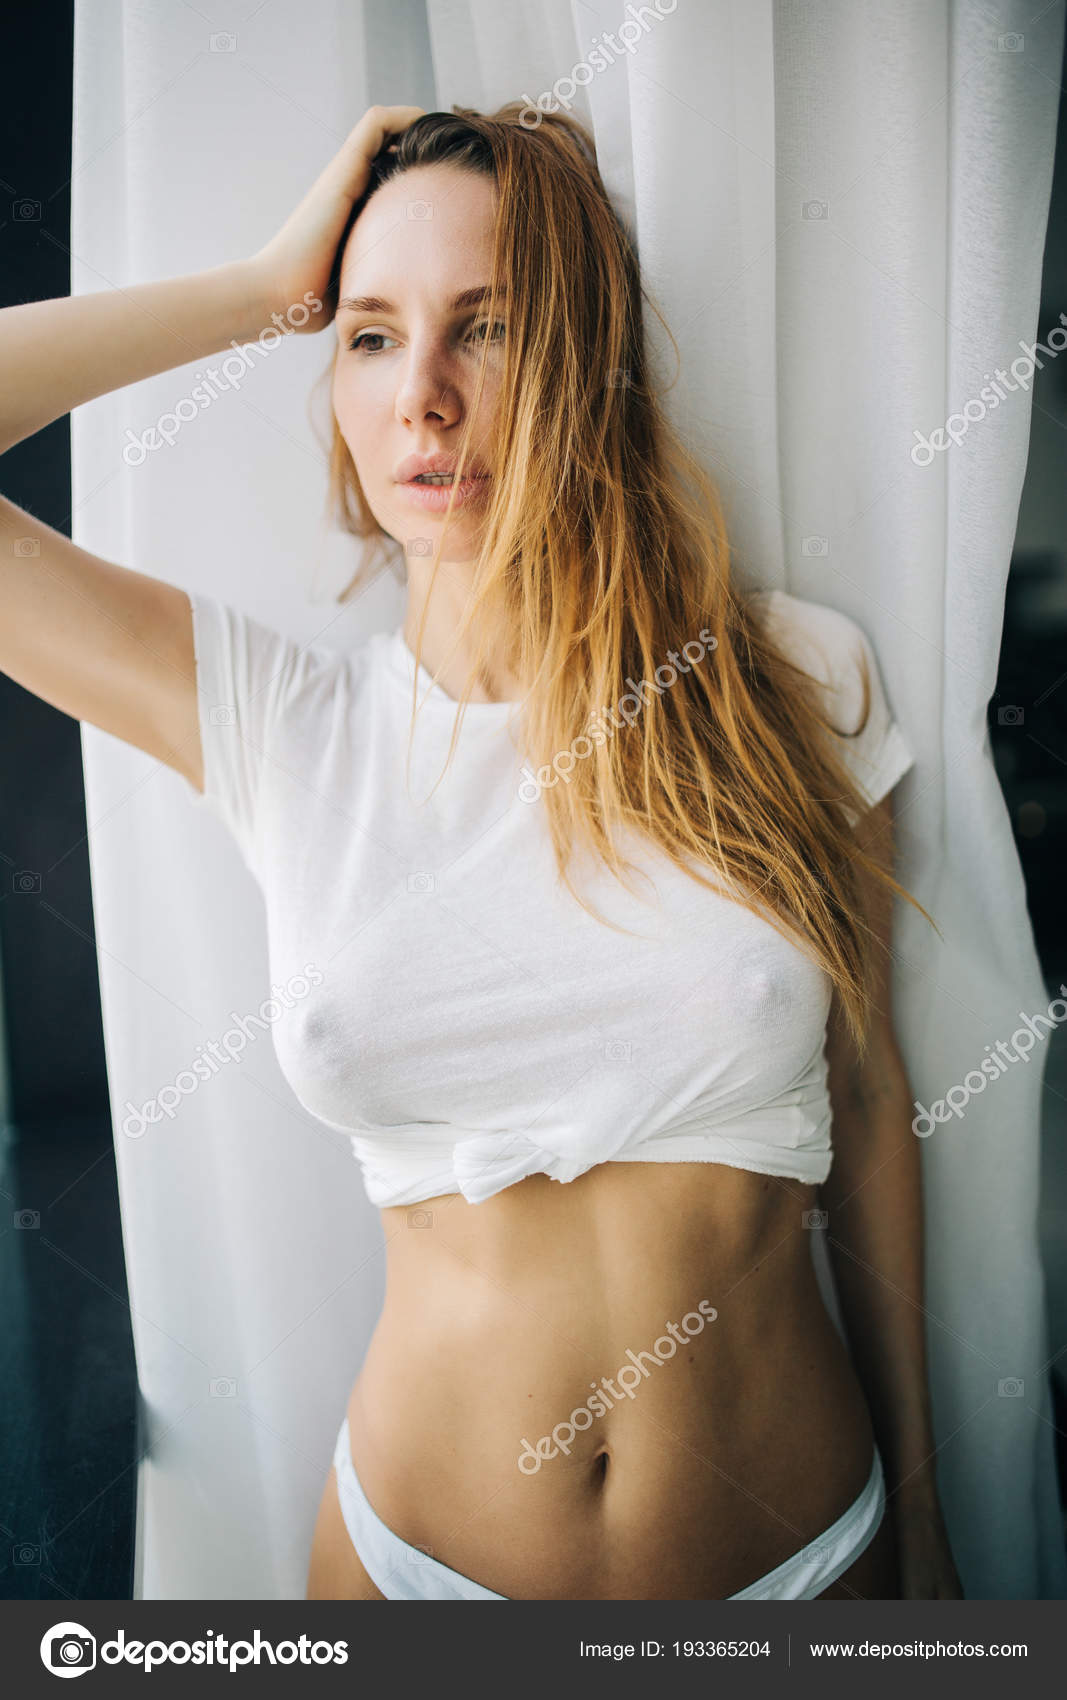 Erotic female underwear models